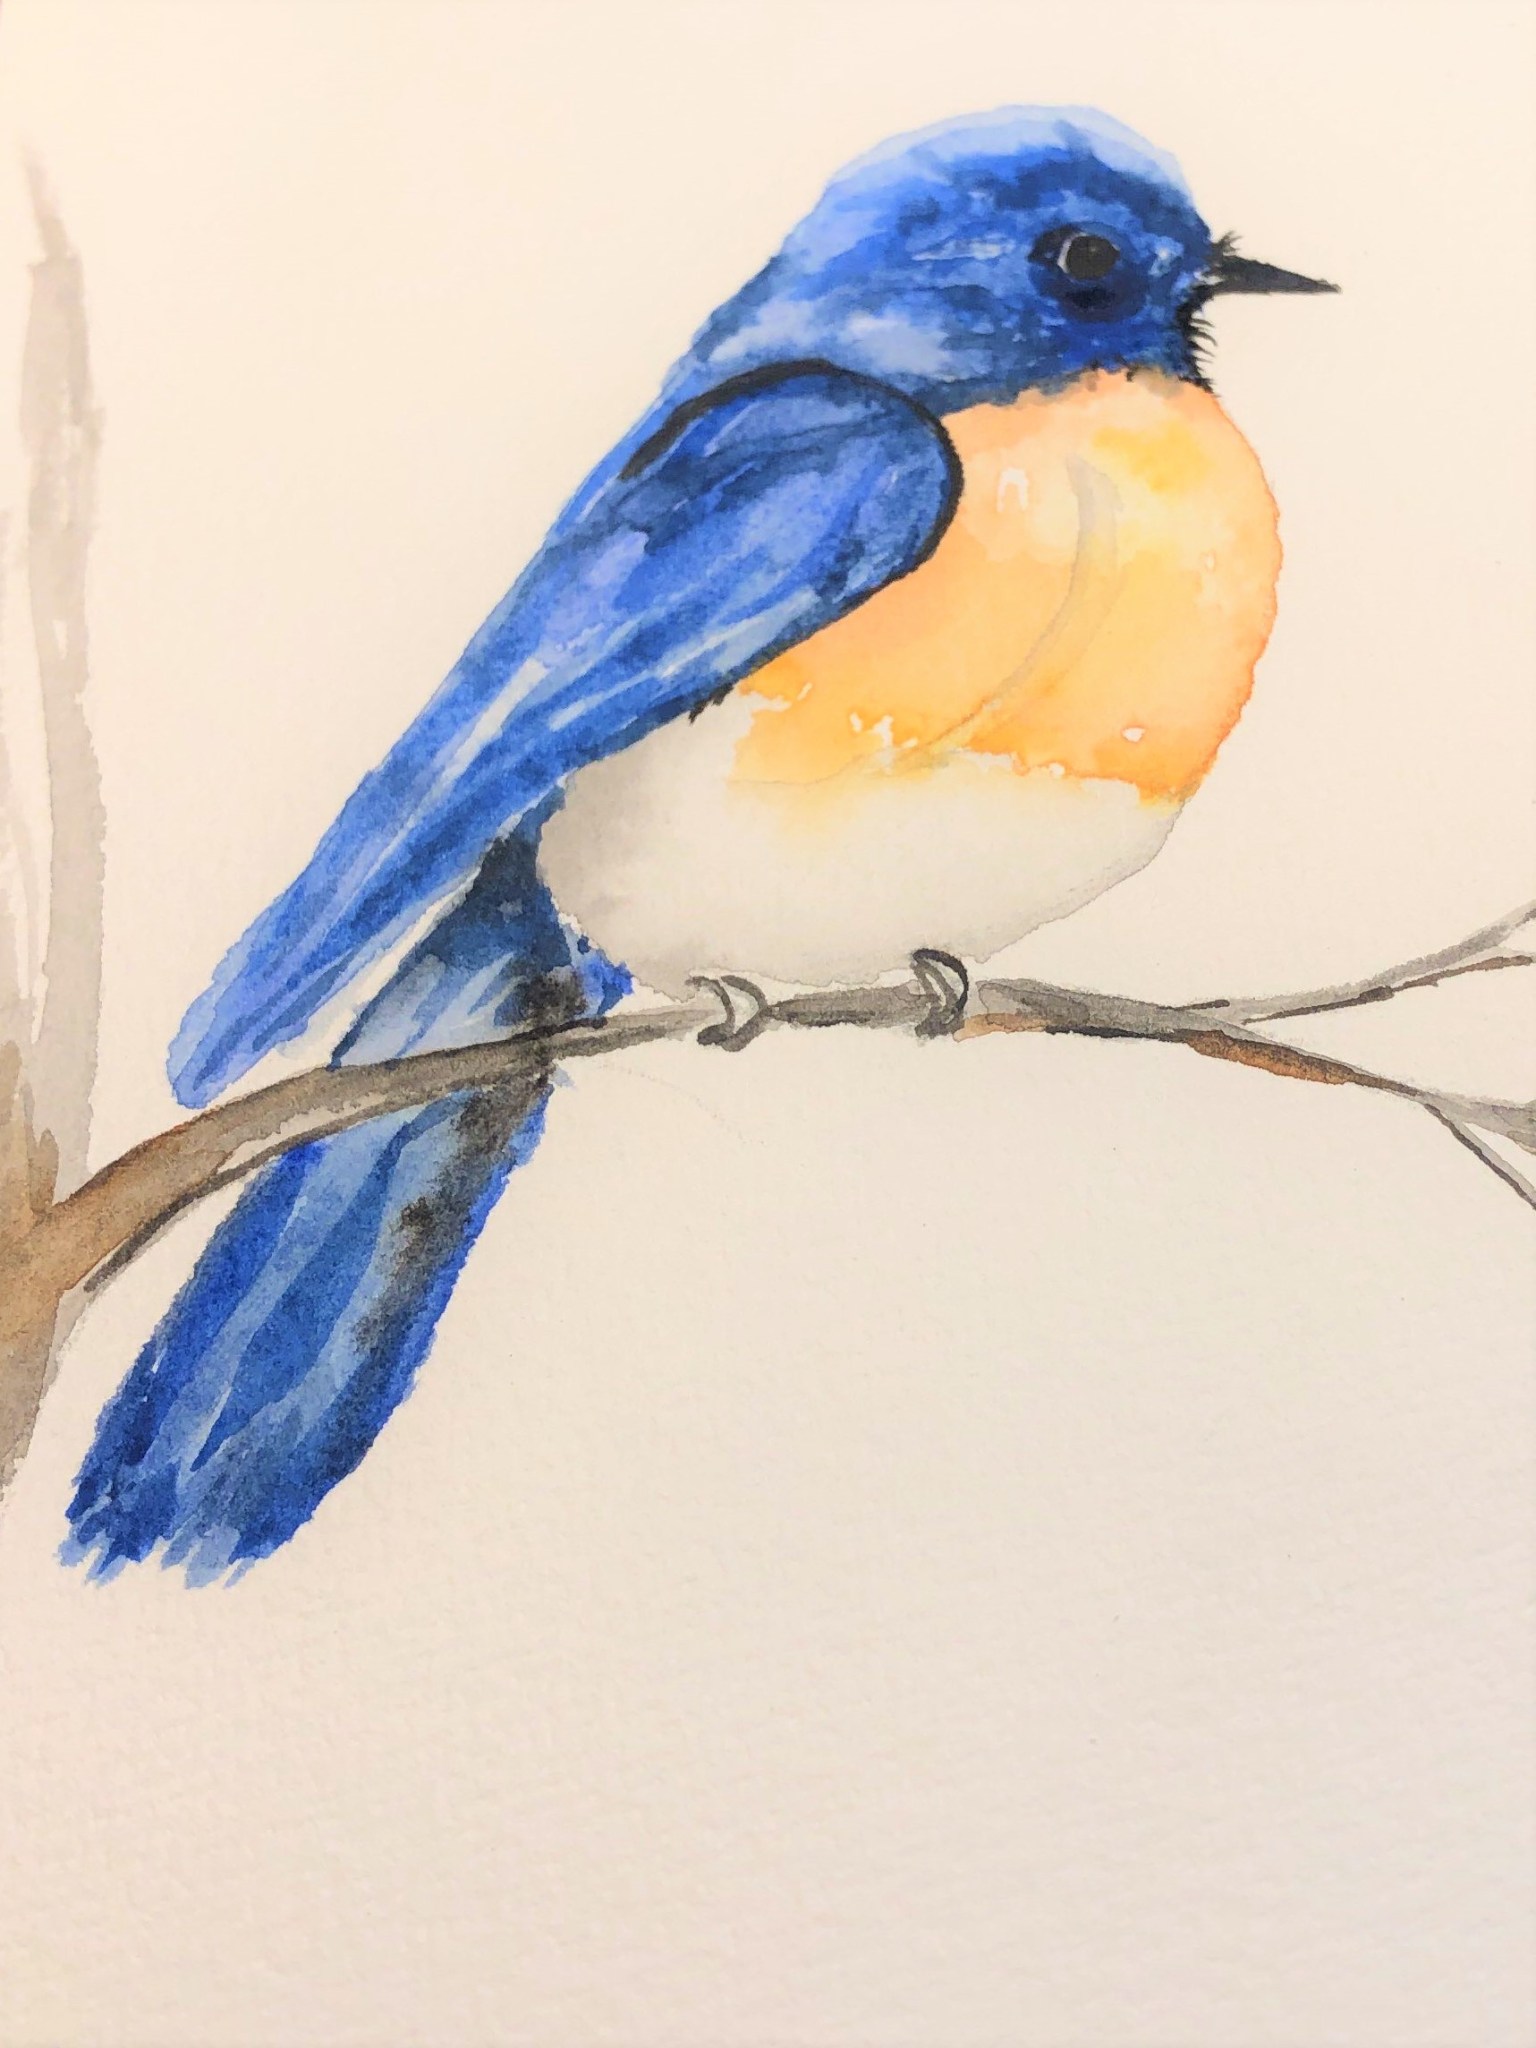 Jennifer Neptune's painting of a bluebird sitting on a branch